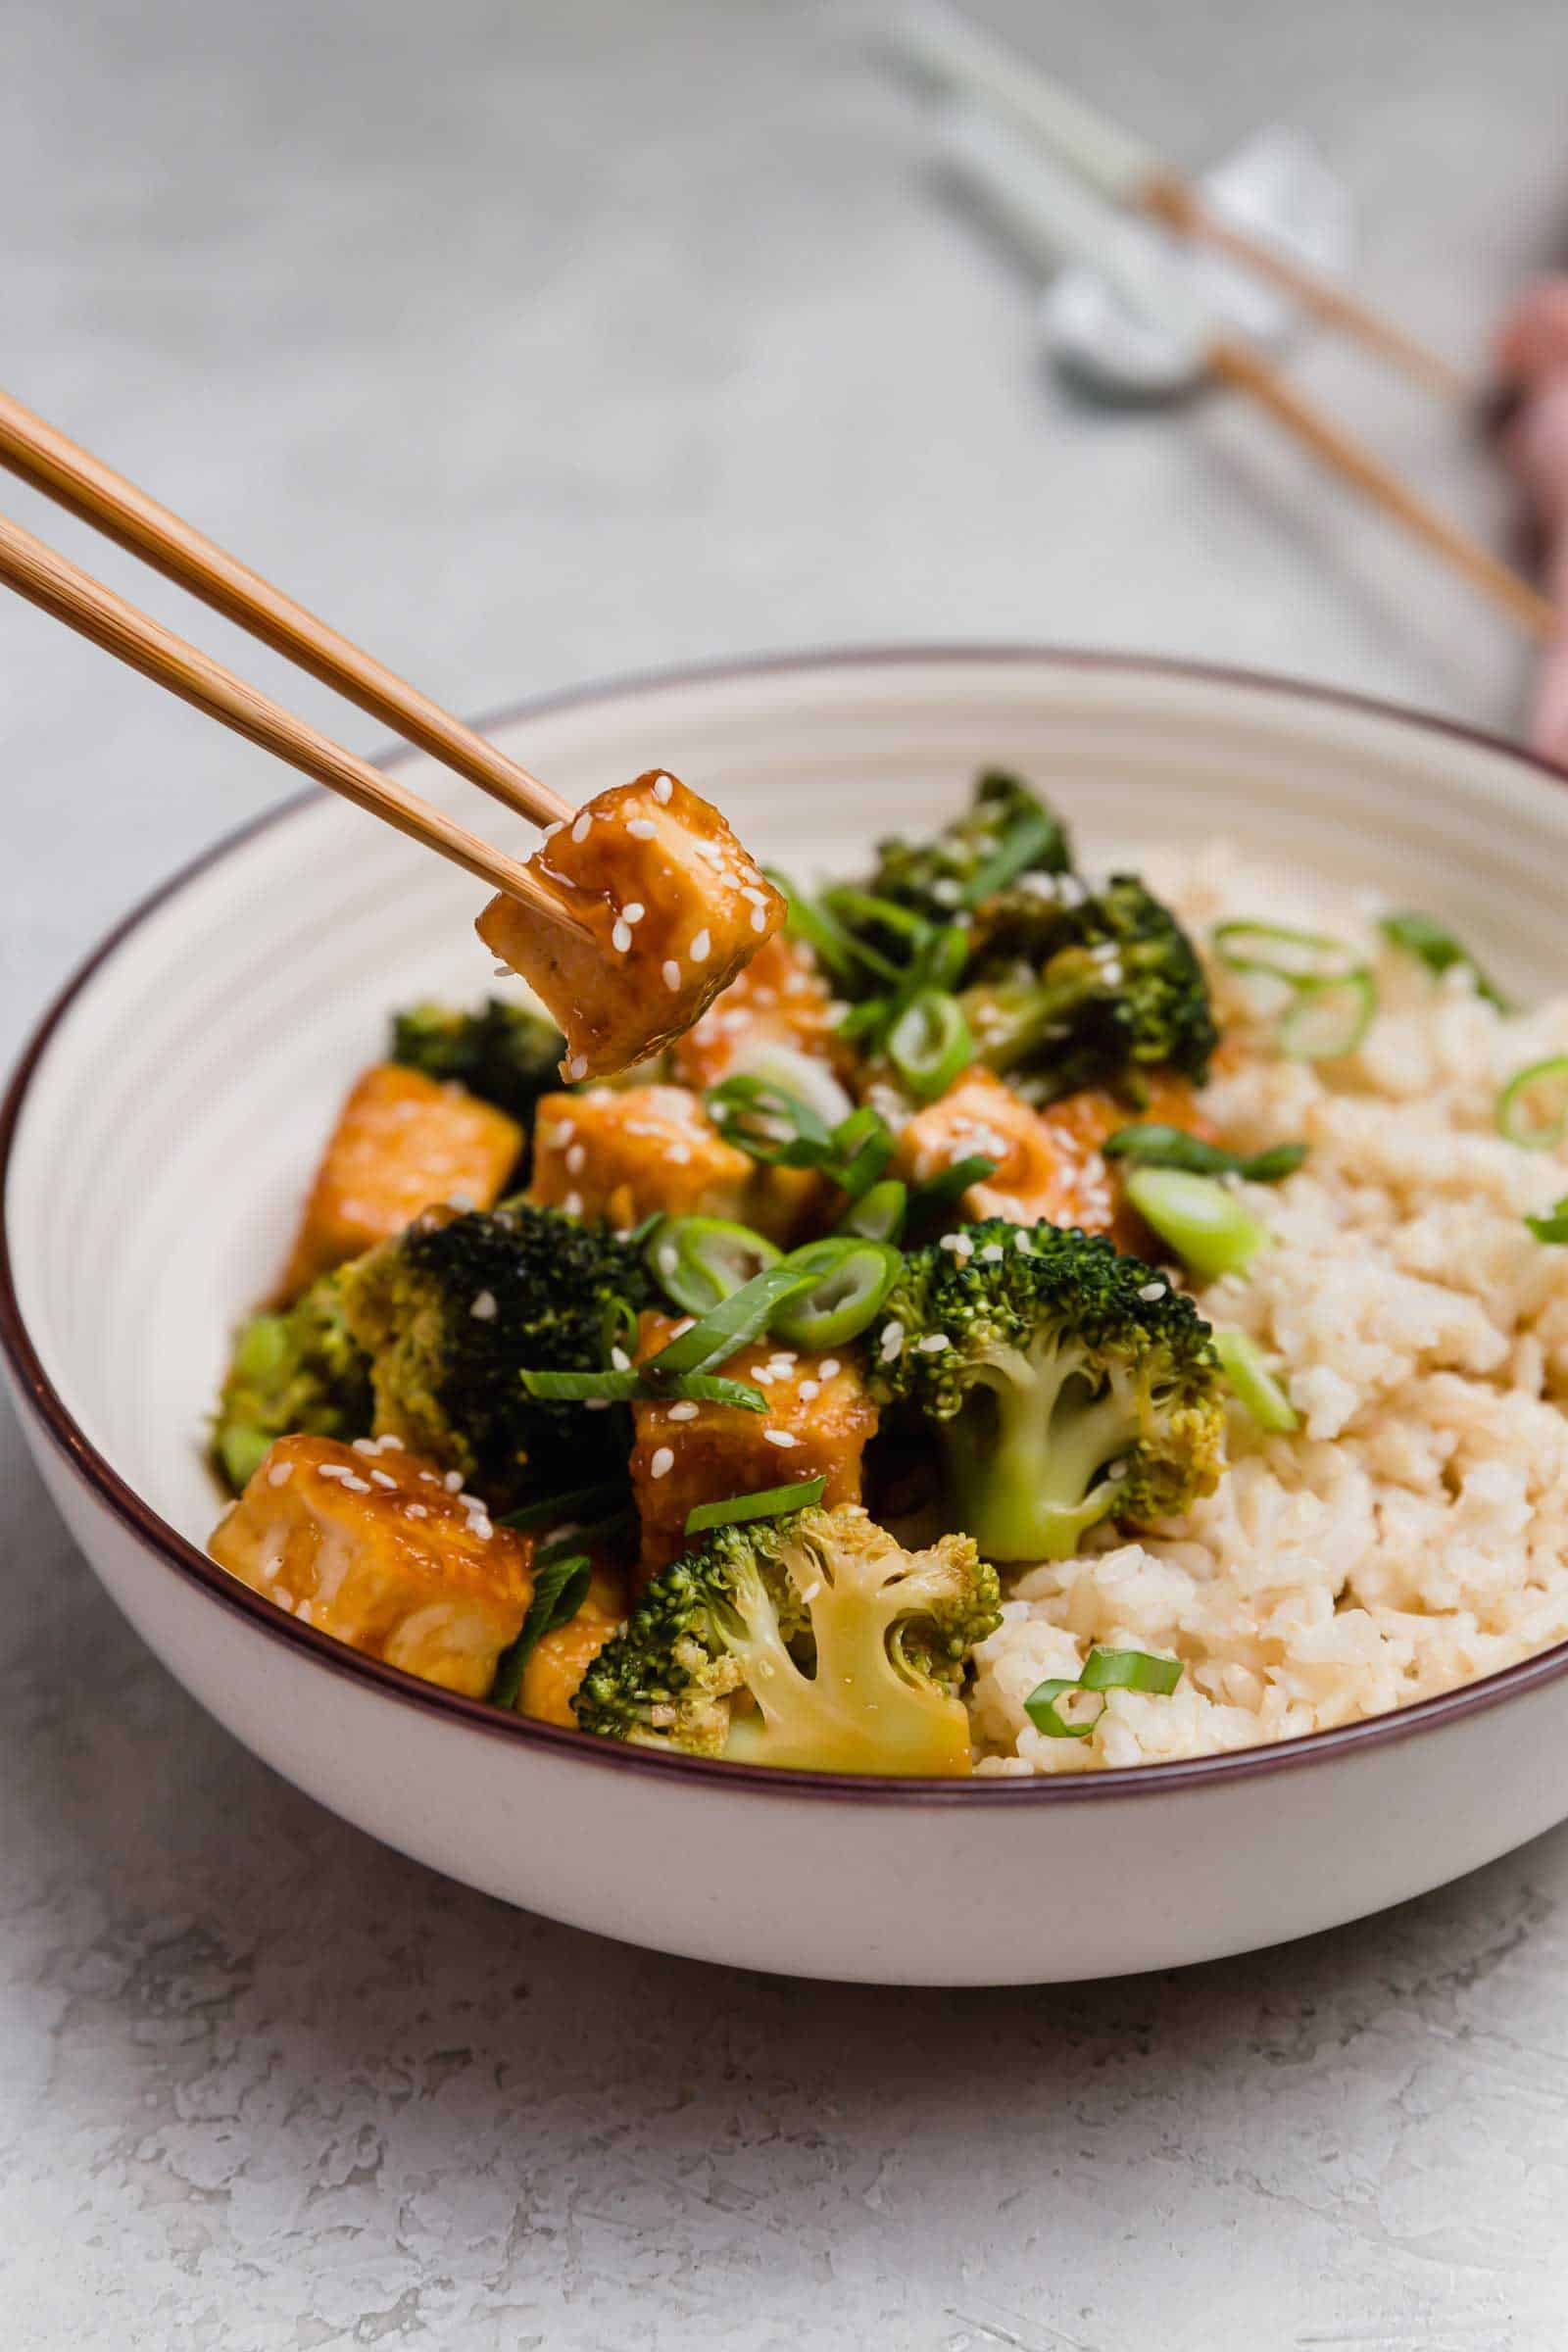 Chopsticks lifting a piece of teriyaki tofu from a bowl of tofu, broccoli, and rice.